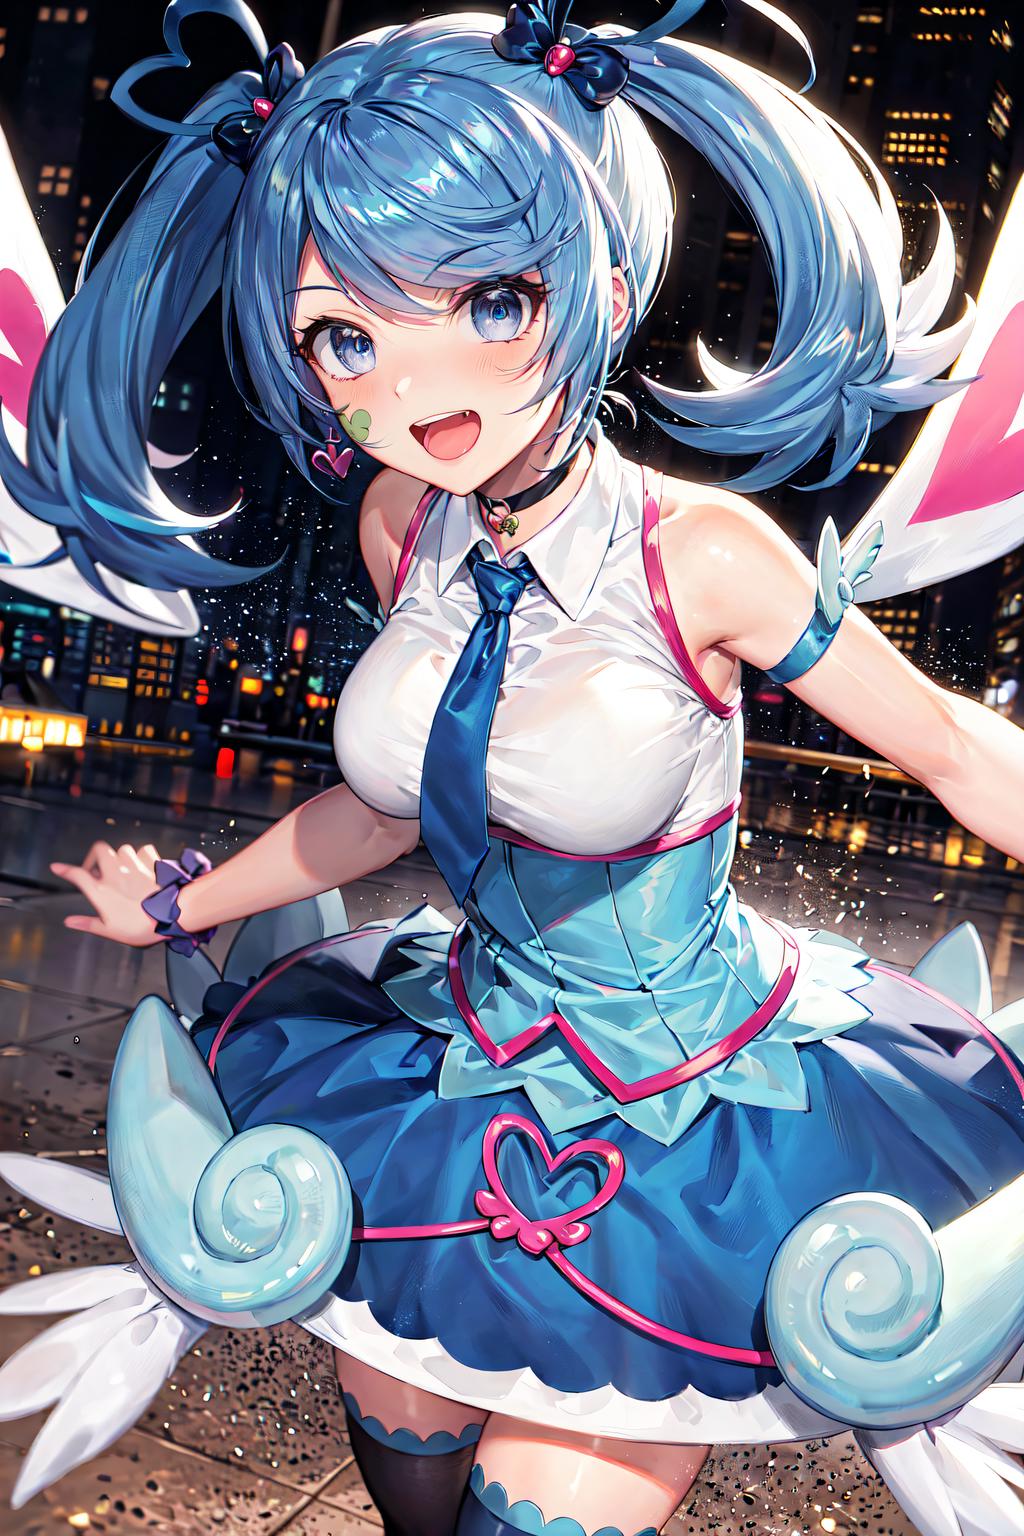 Blue Angel ブルーエンジェル / Yu-Gi-Oh! image by Sephiaton